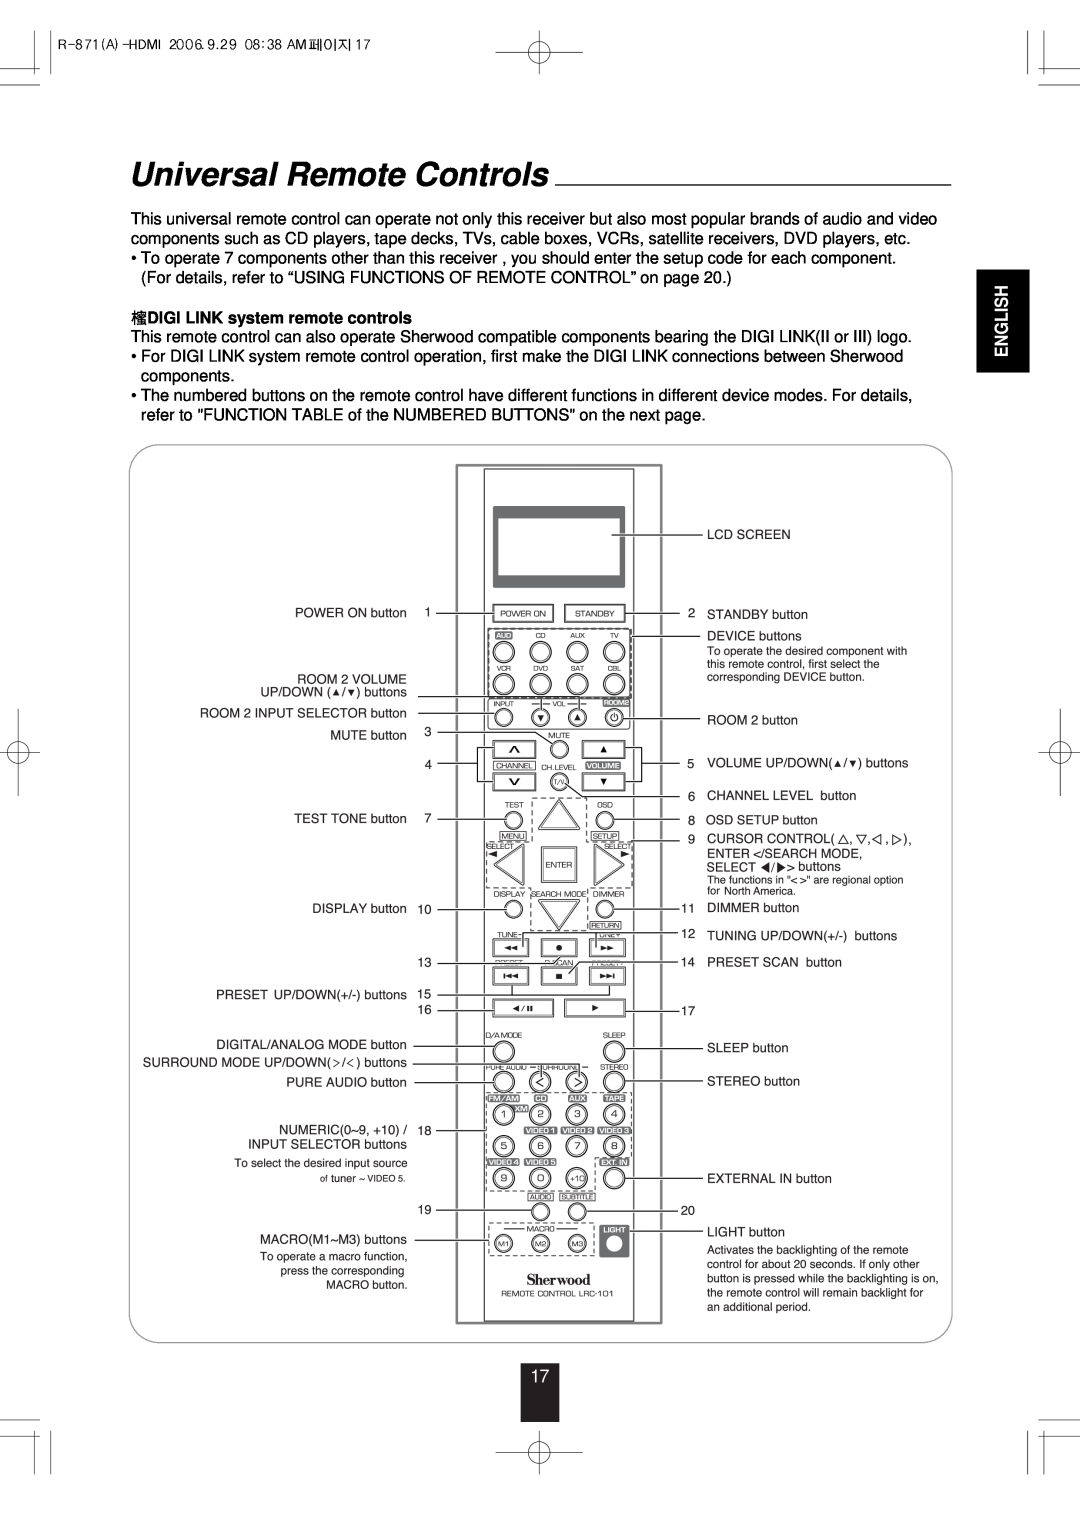 Sherwood R-871 manual Universal Remote Controls, DIGI LINK system remote controls, English 